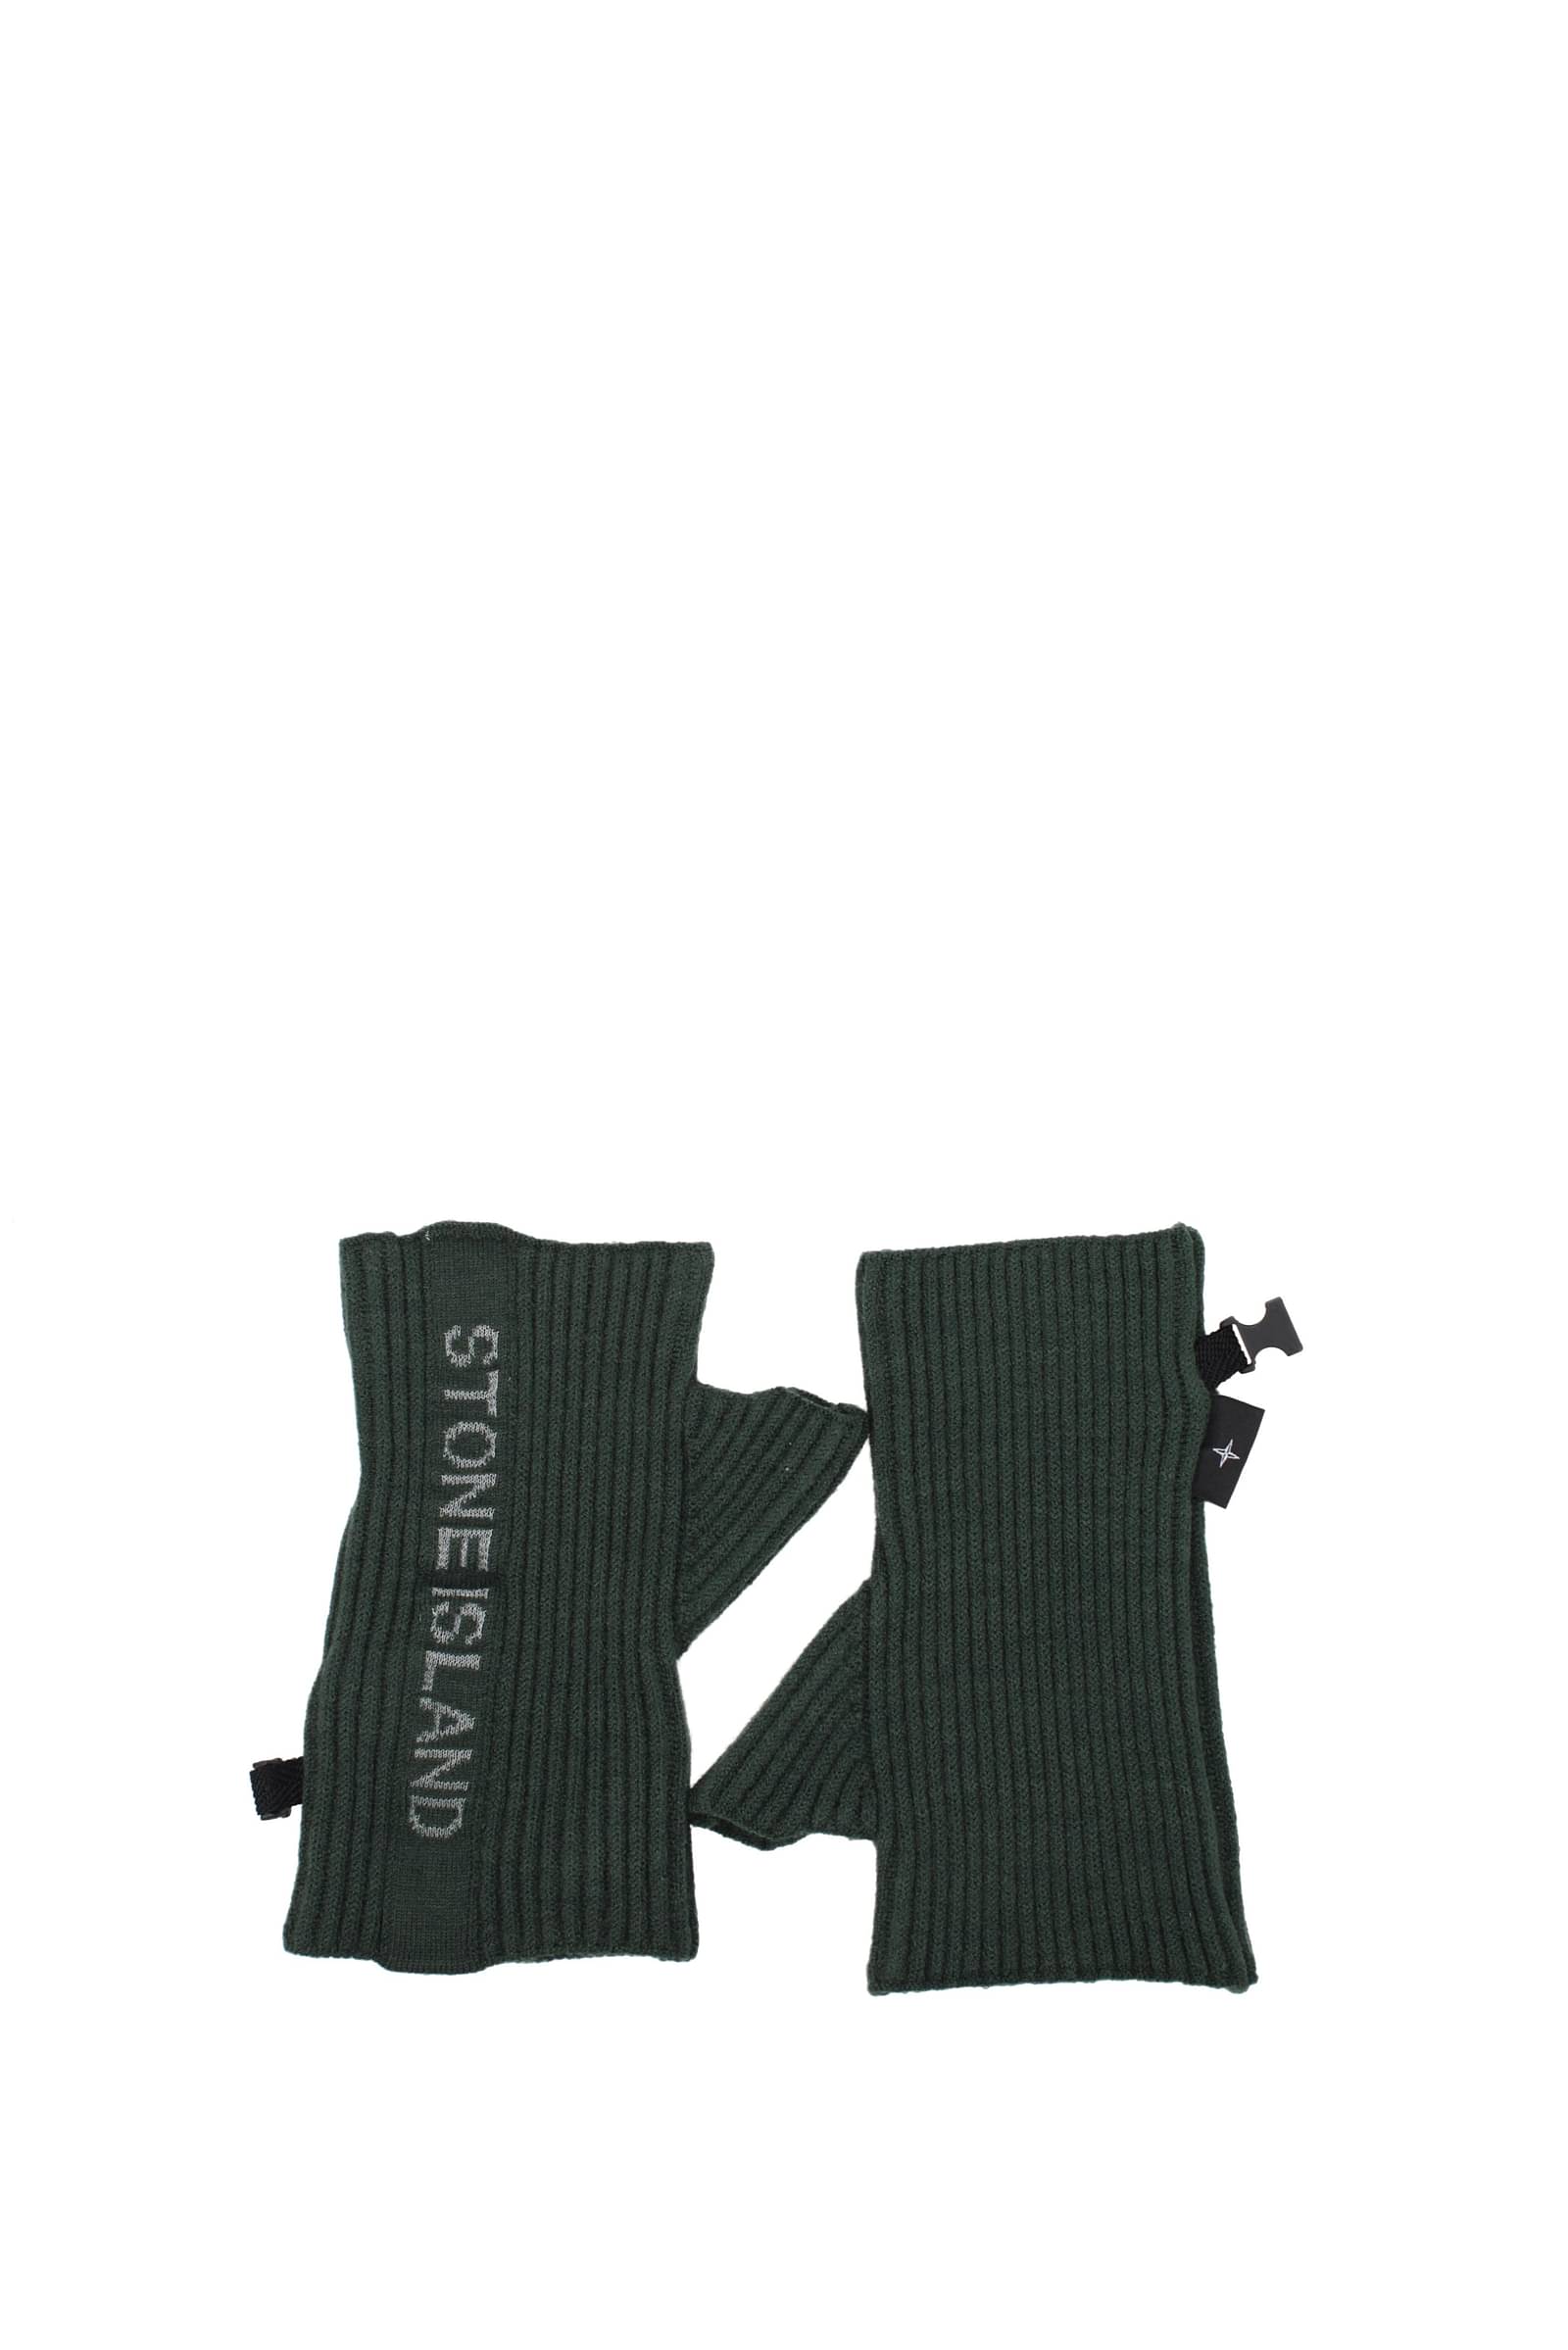 Stone Island Gloves Men 7715N05A7V0058 Wool Green Dark Green 112,88€